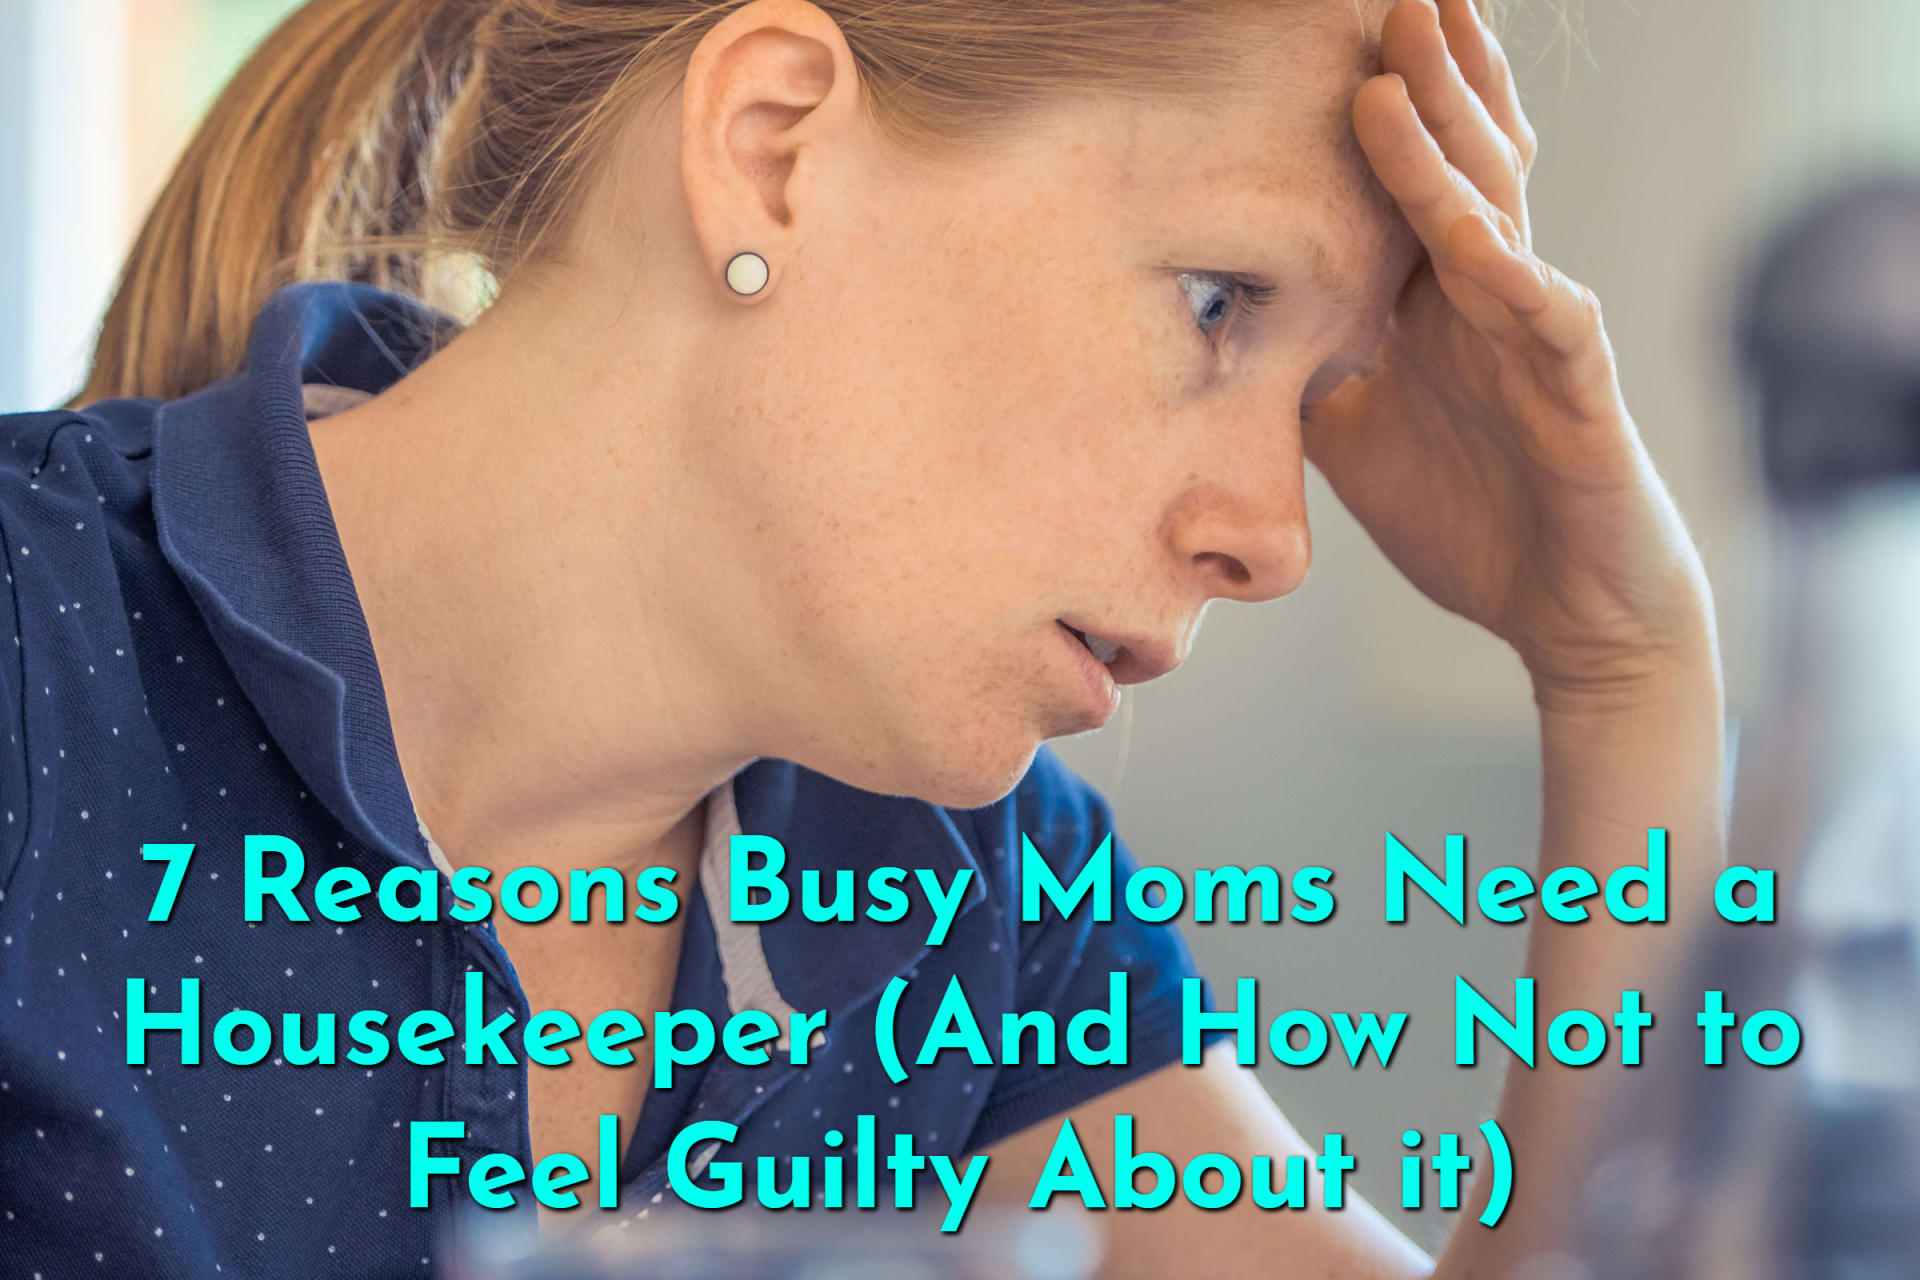 An overwhelmed mom contemplates hiring a housekeeper